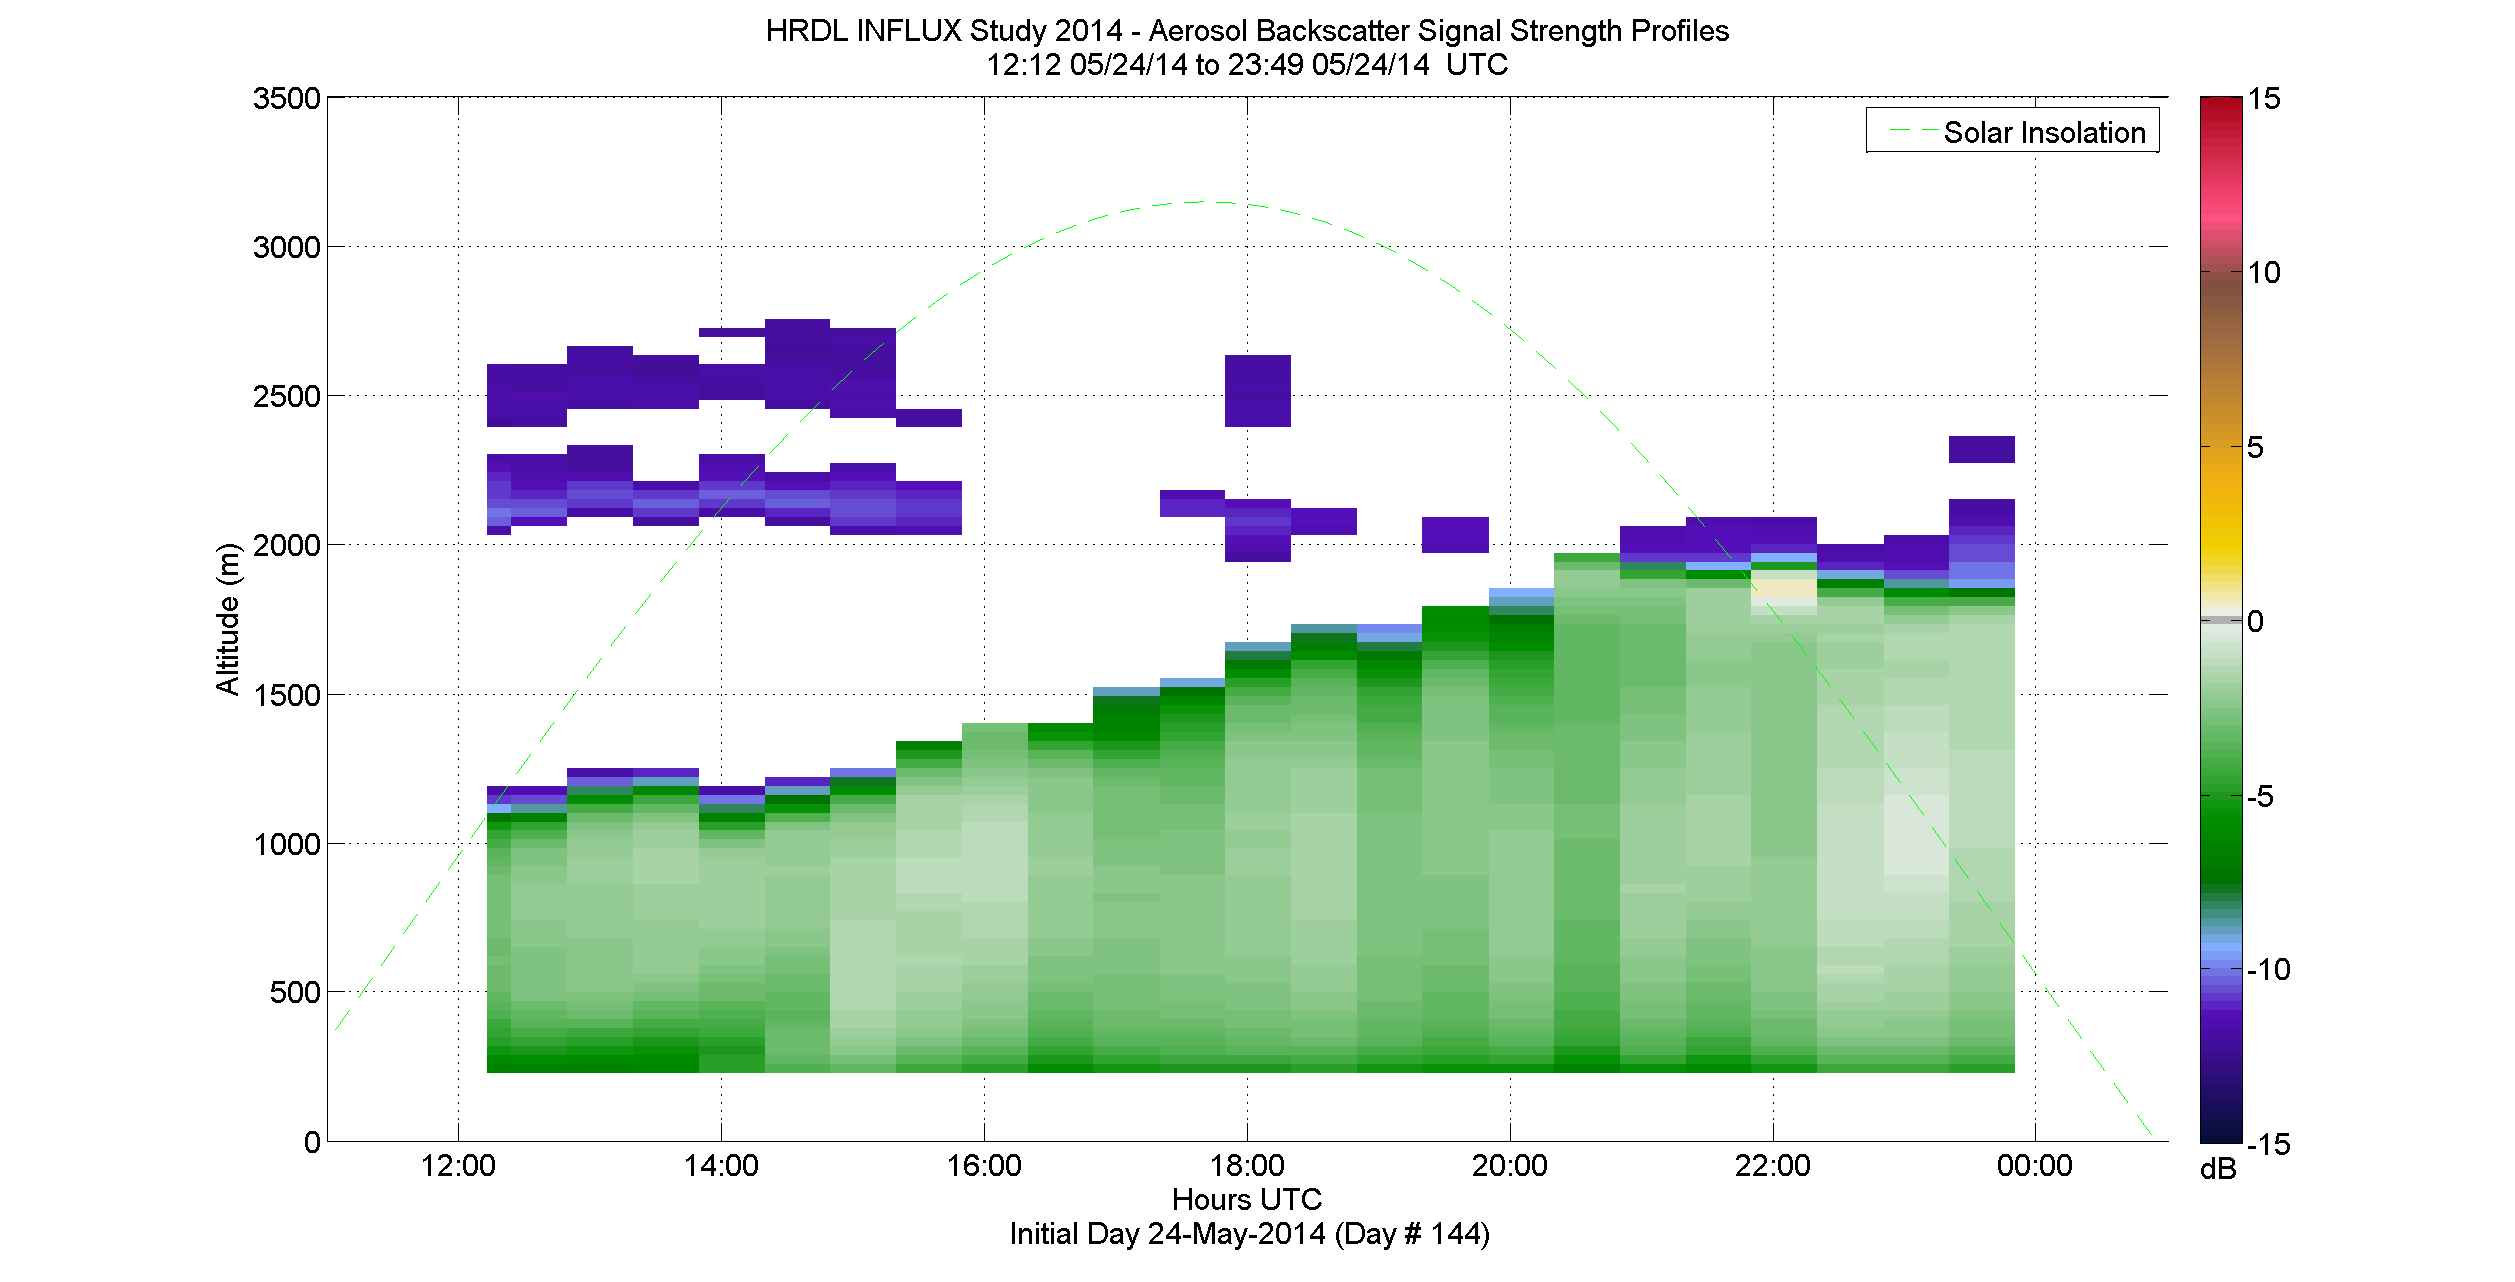 HRDL aerosol backscatter signal strength profile - May 24 pm